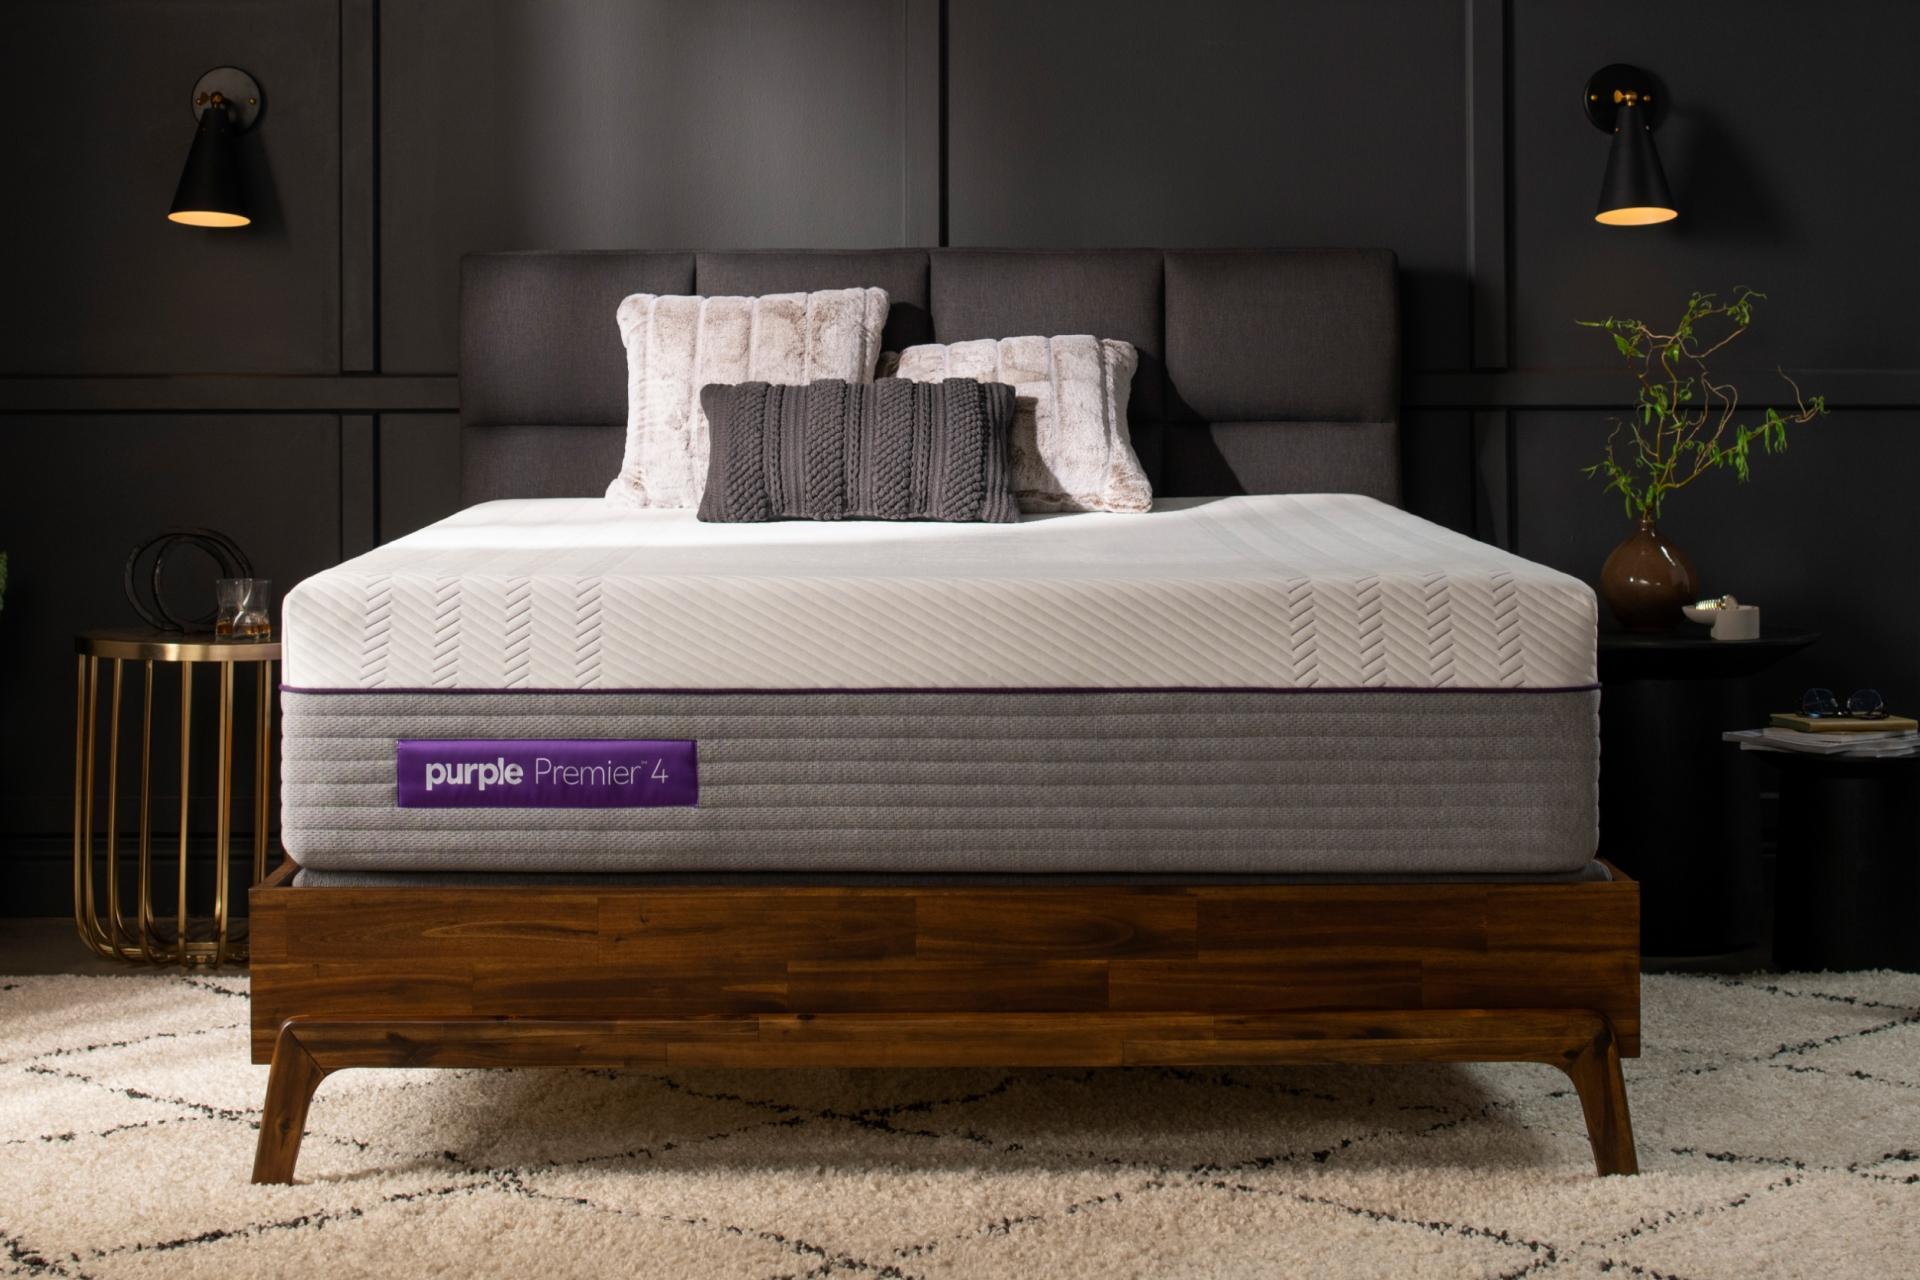 purple 4 mattress life expectancy